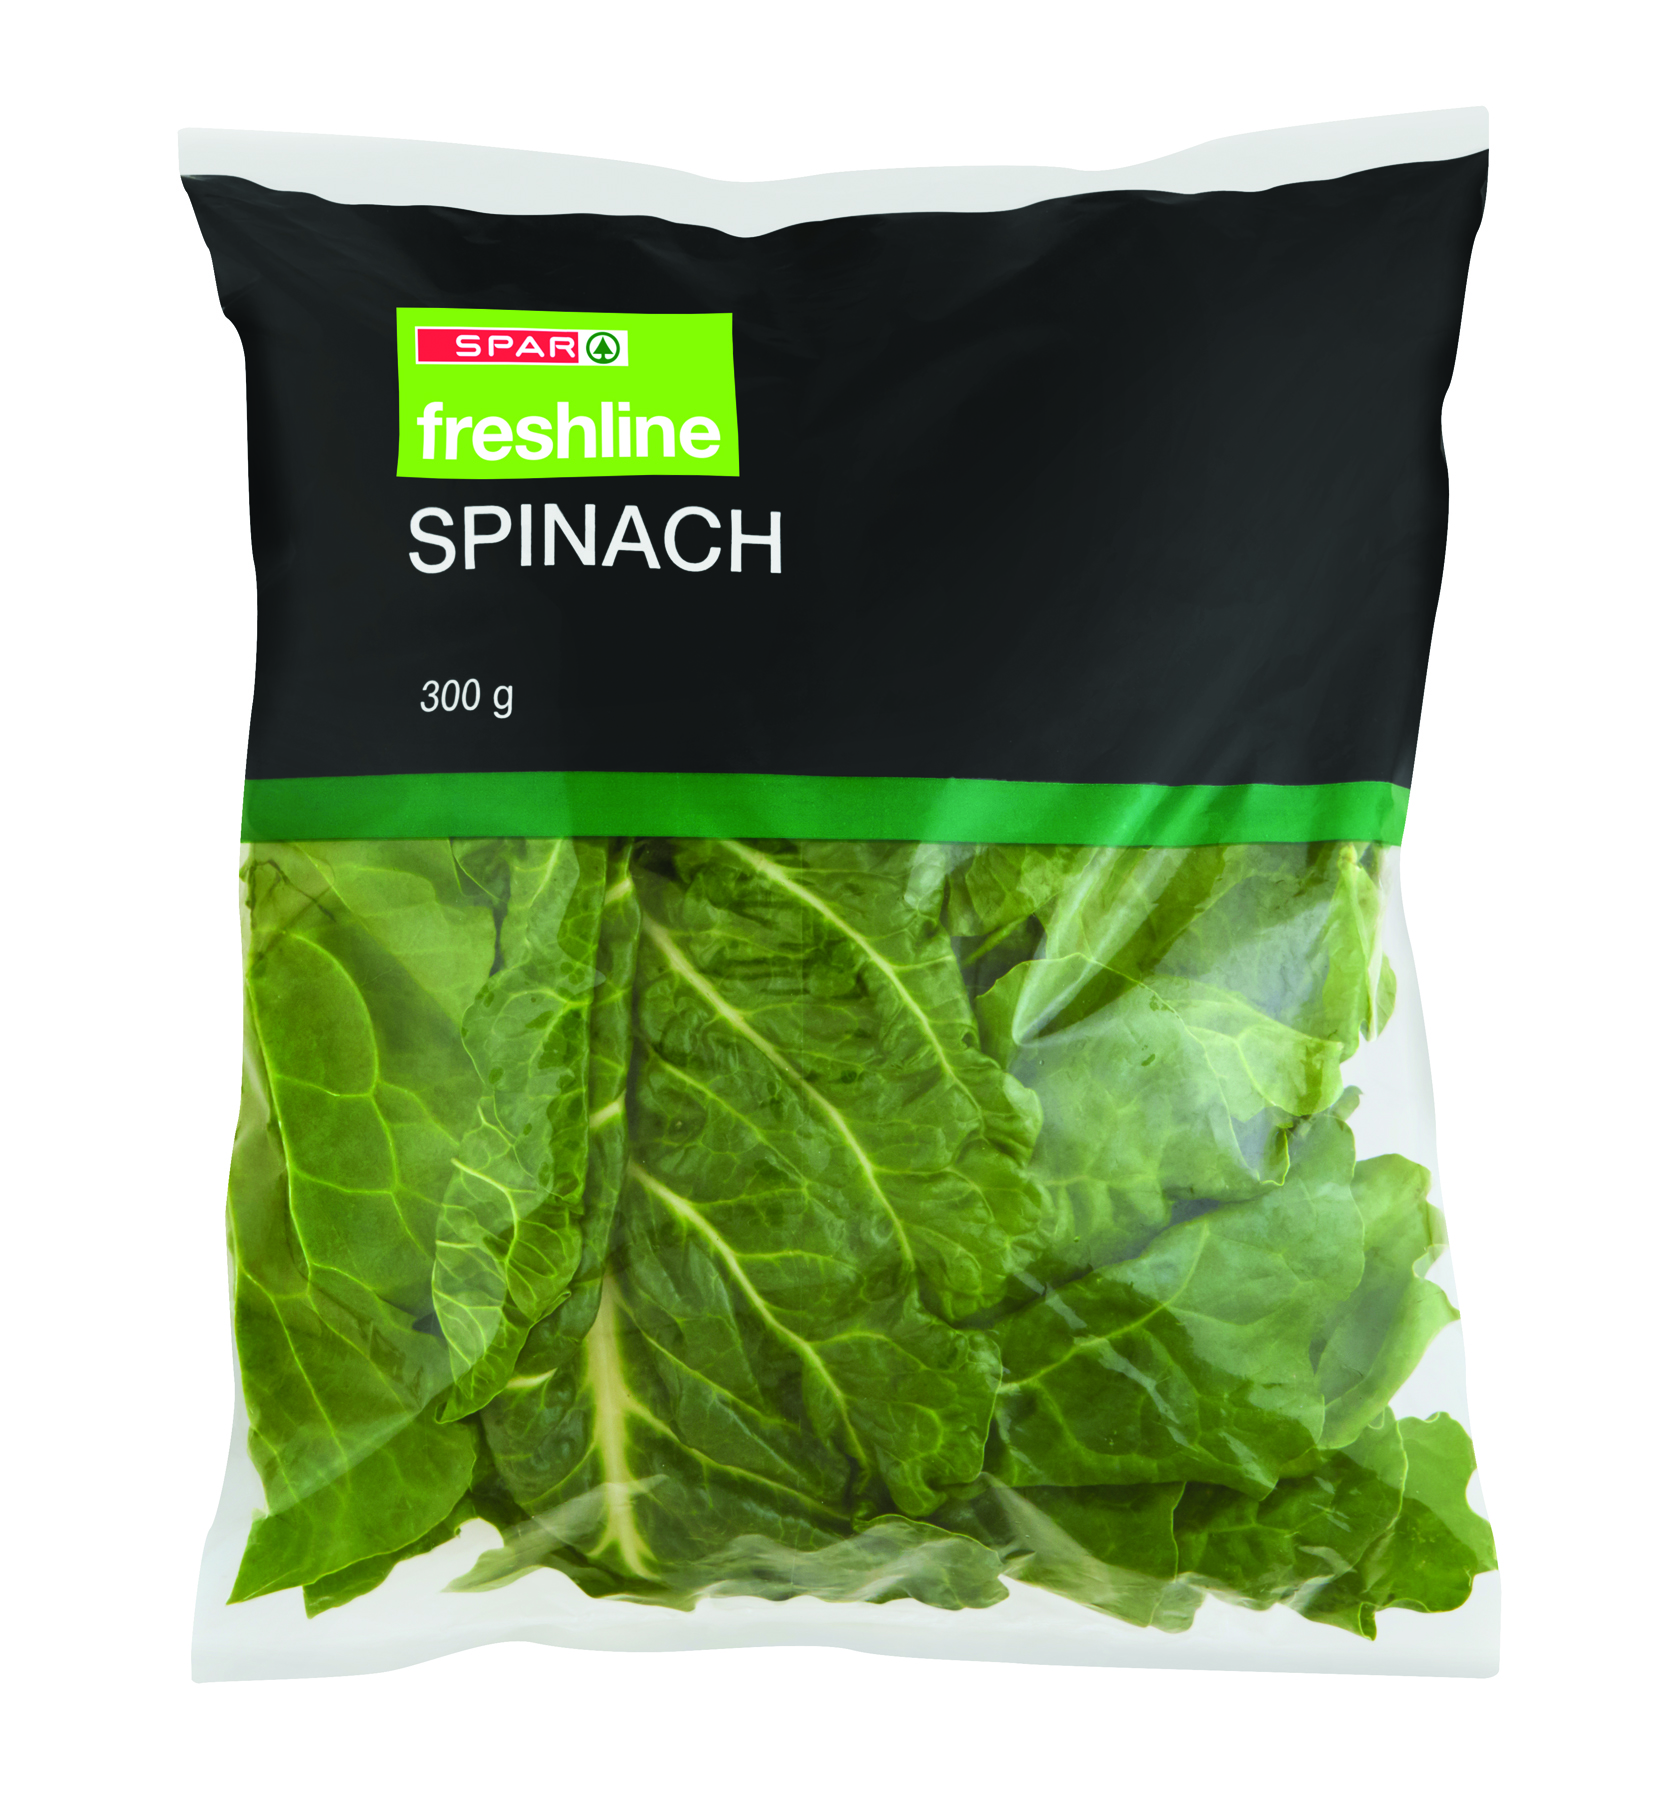 freshline spinach